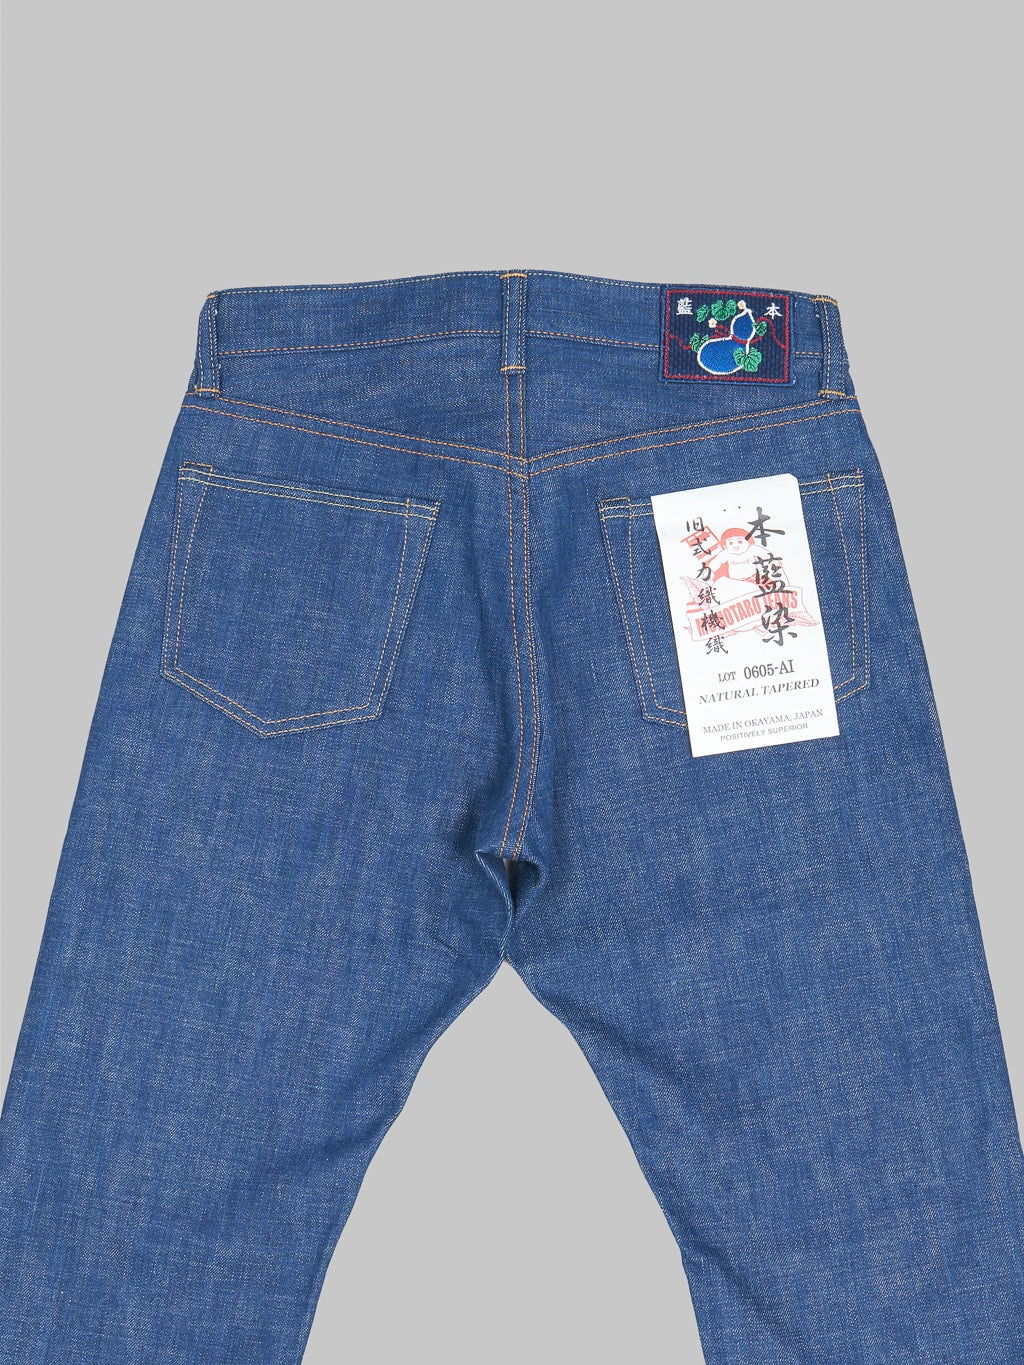 momotaro 0605 ai natural indigo dyed natural tapered denim jeans back pockets